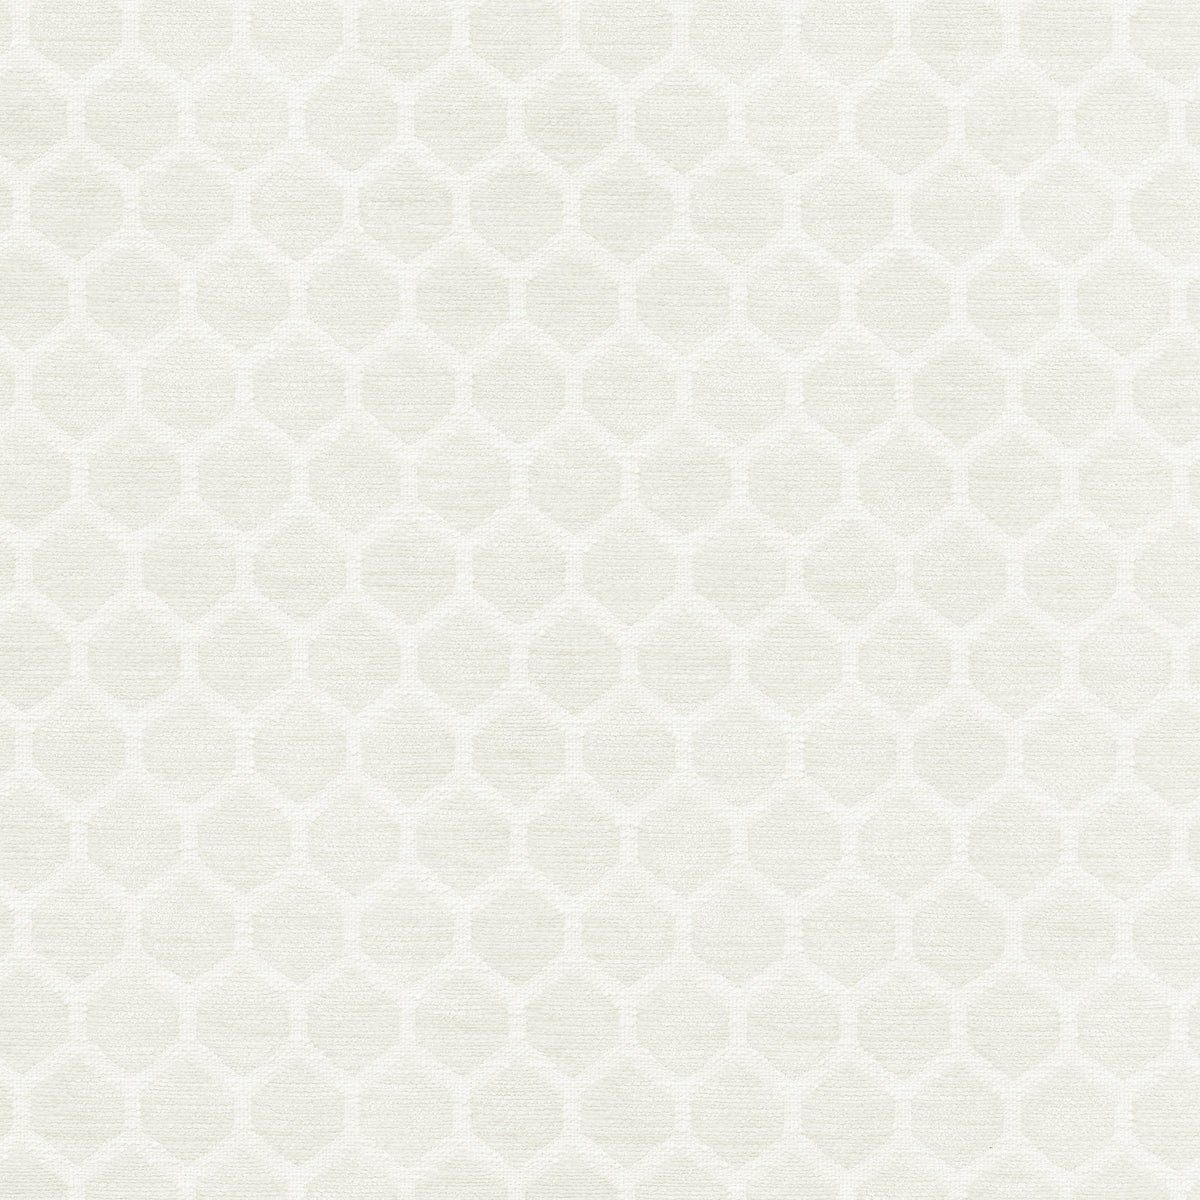 P/K Lifestyles Performance Honeycomb - White 411377 Upholstery Fabric